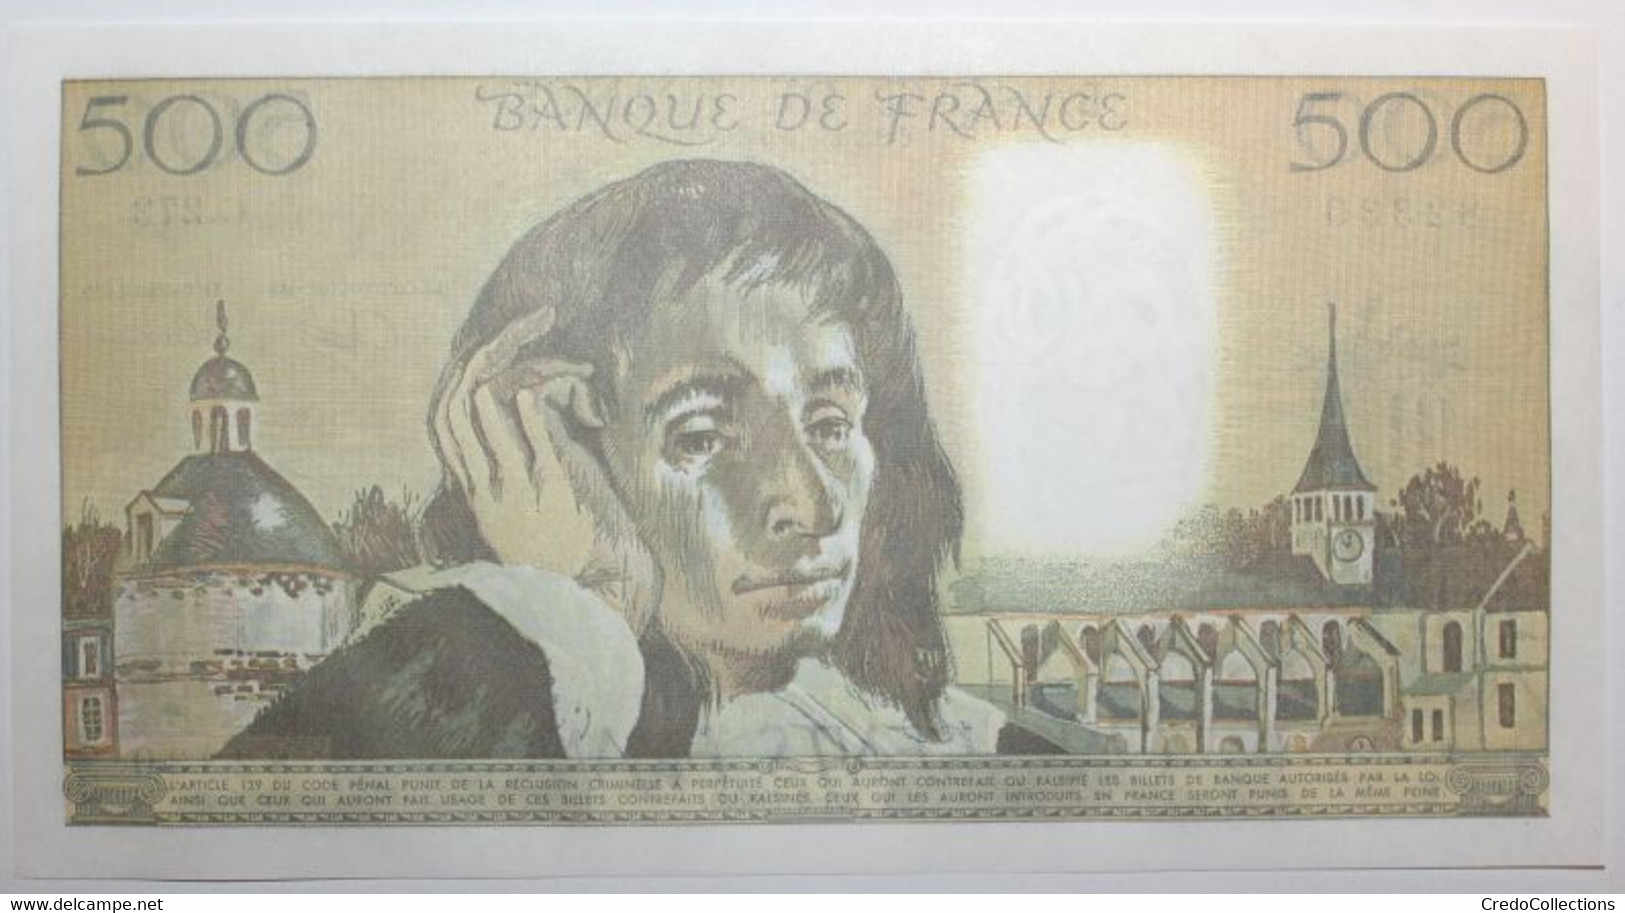 France - 500 Francs - 3-3-1988 - PICK 156g.1 / F71.38 - NEUF (3 billets)